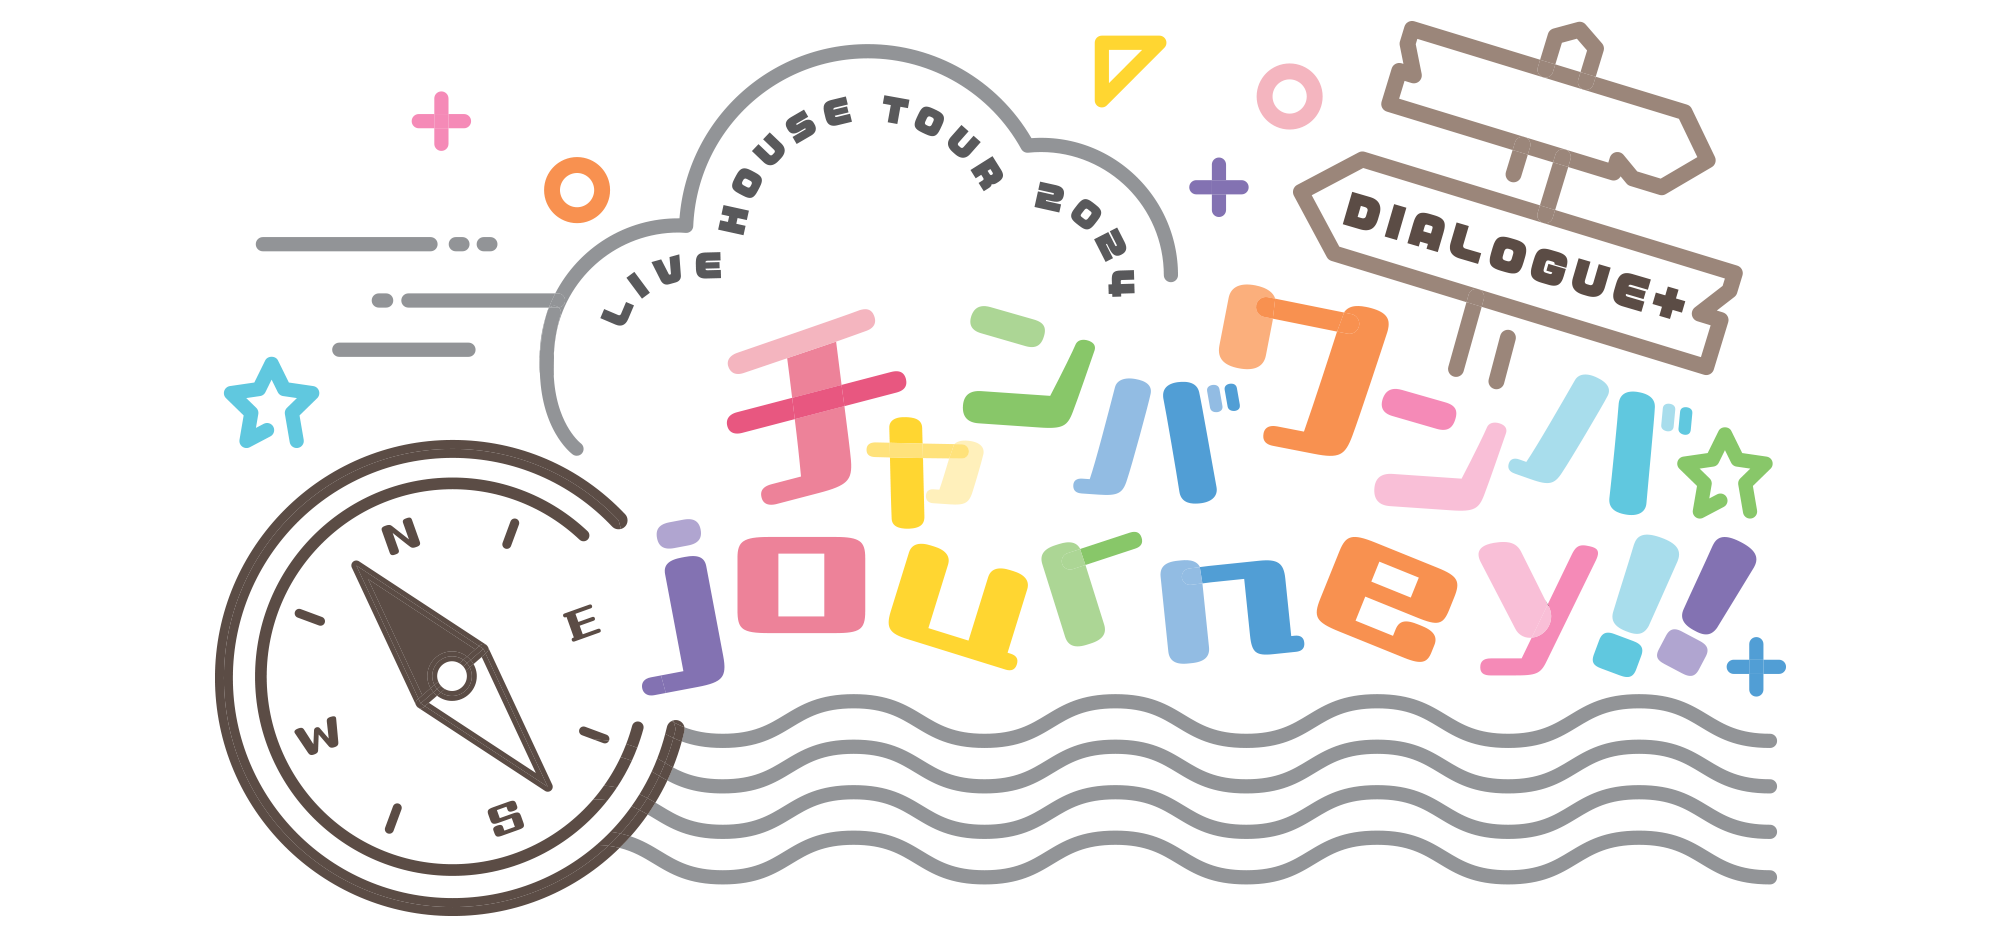 DIALOGUE＋ ライブハウスツアー「チャンバワンバjourney!!」